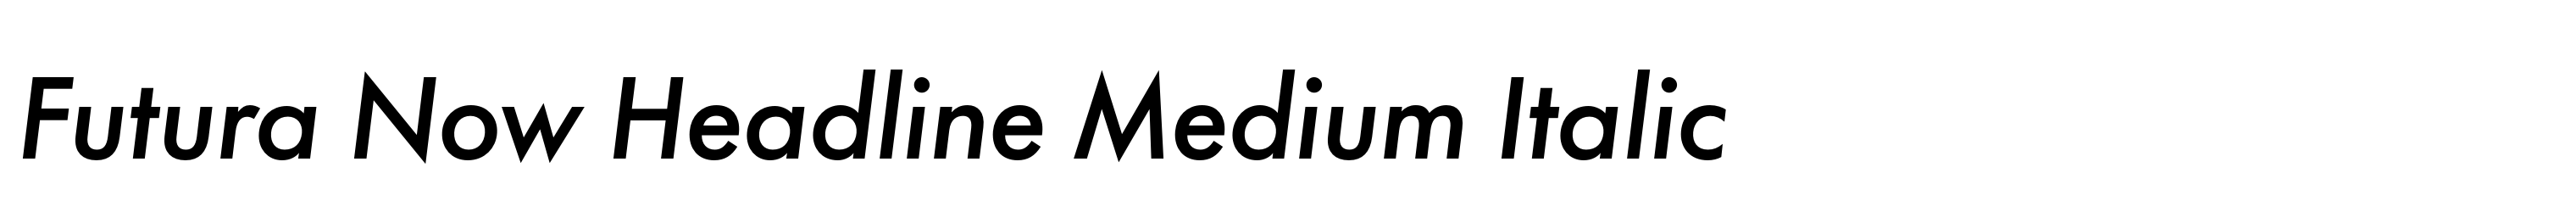 Futura Now Headline Medium Italic